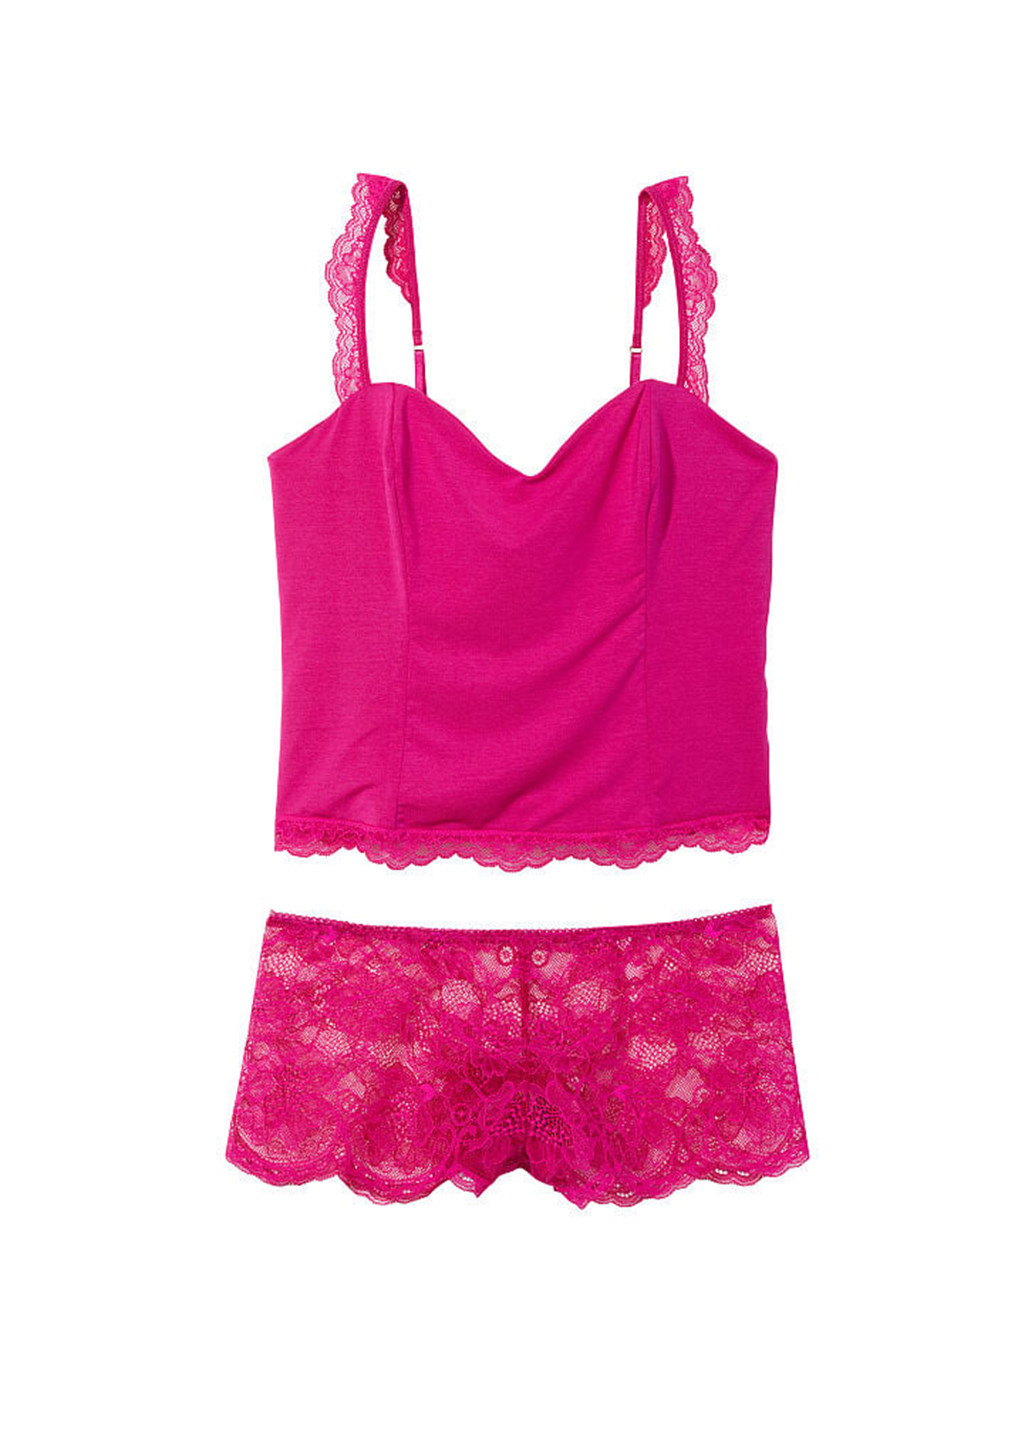 Рожева всесезон піжама (топ, шорти) топ + шорти Victoria's Secret